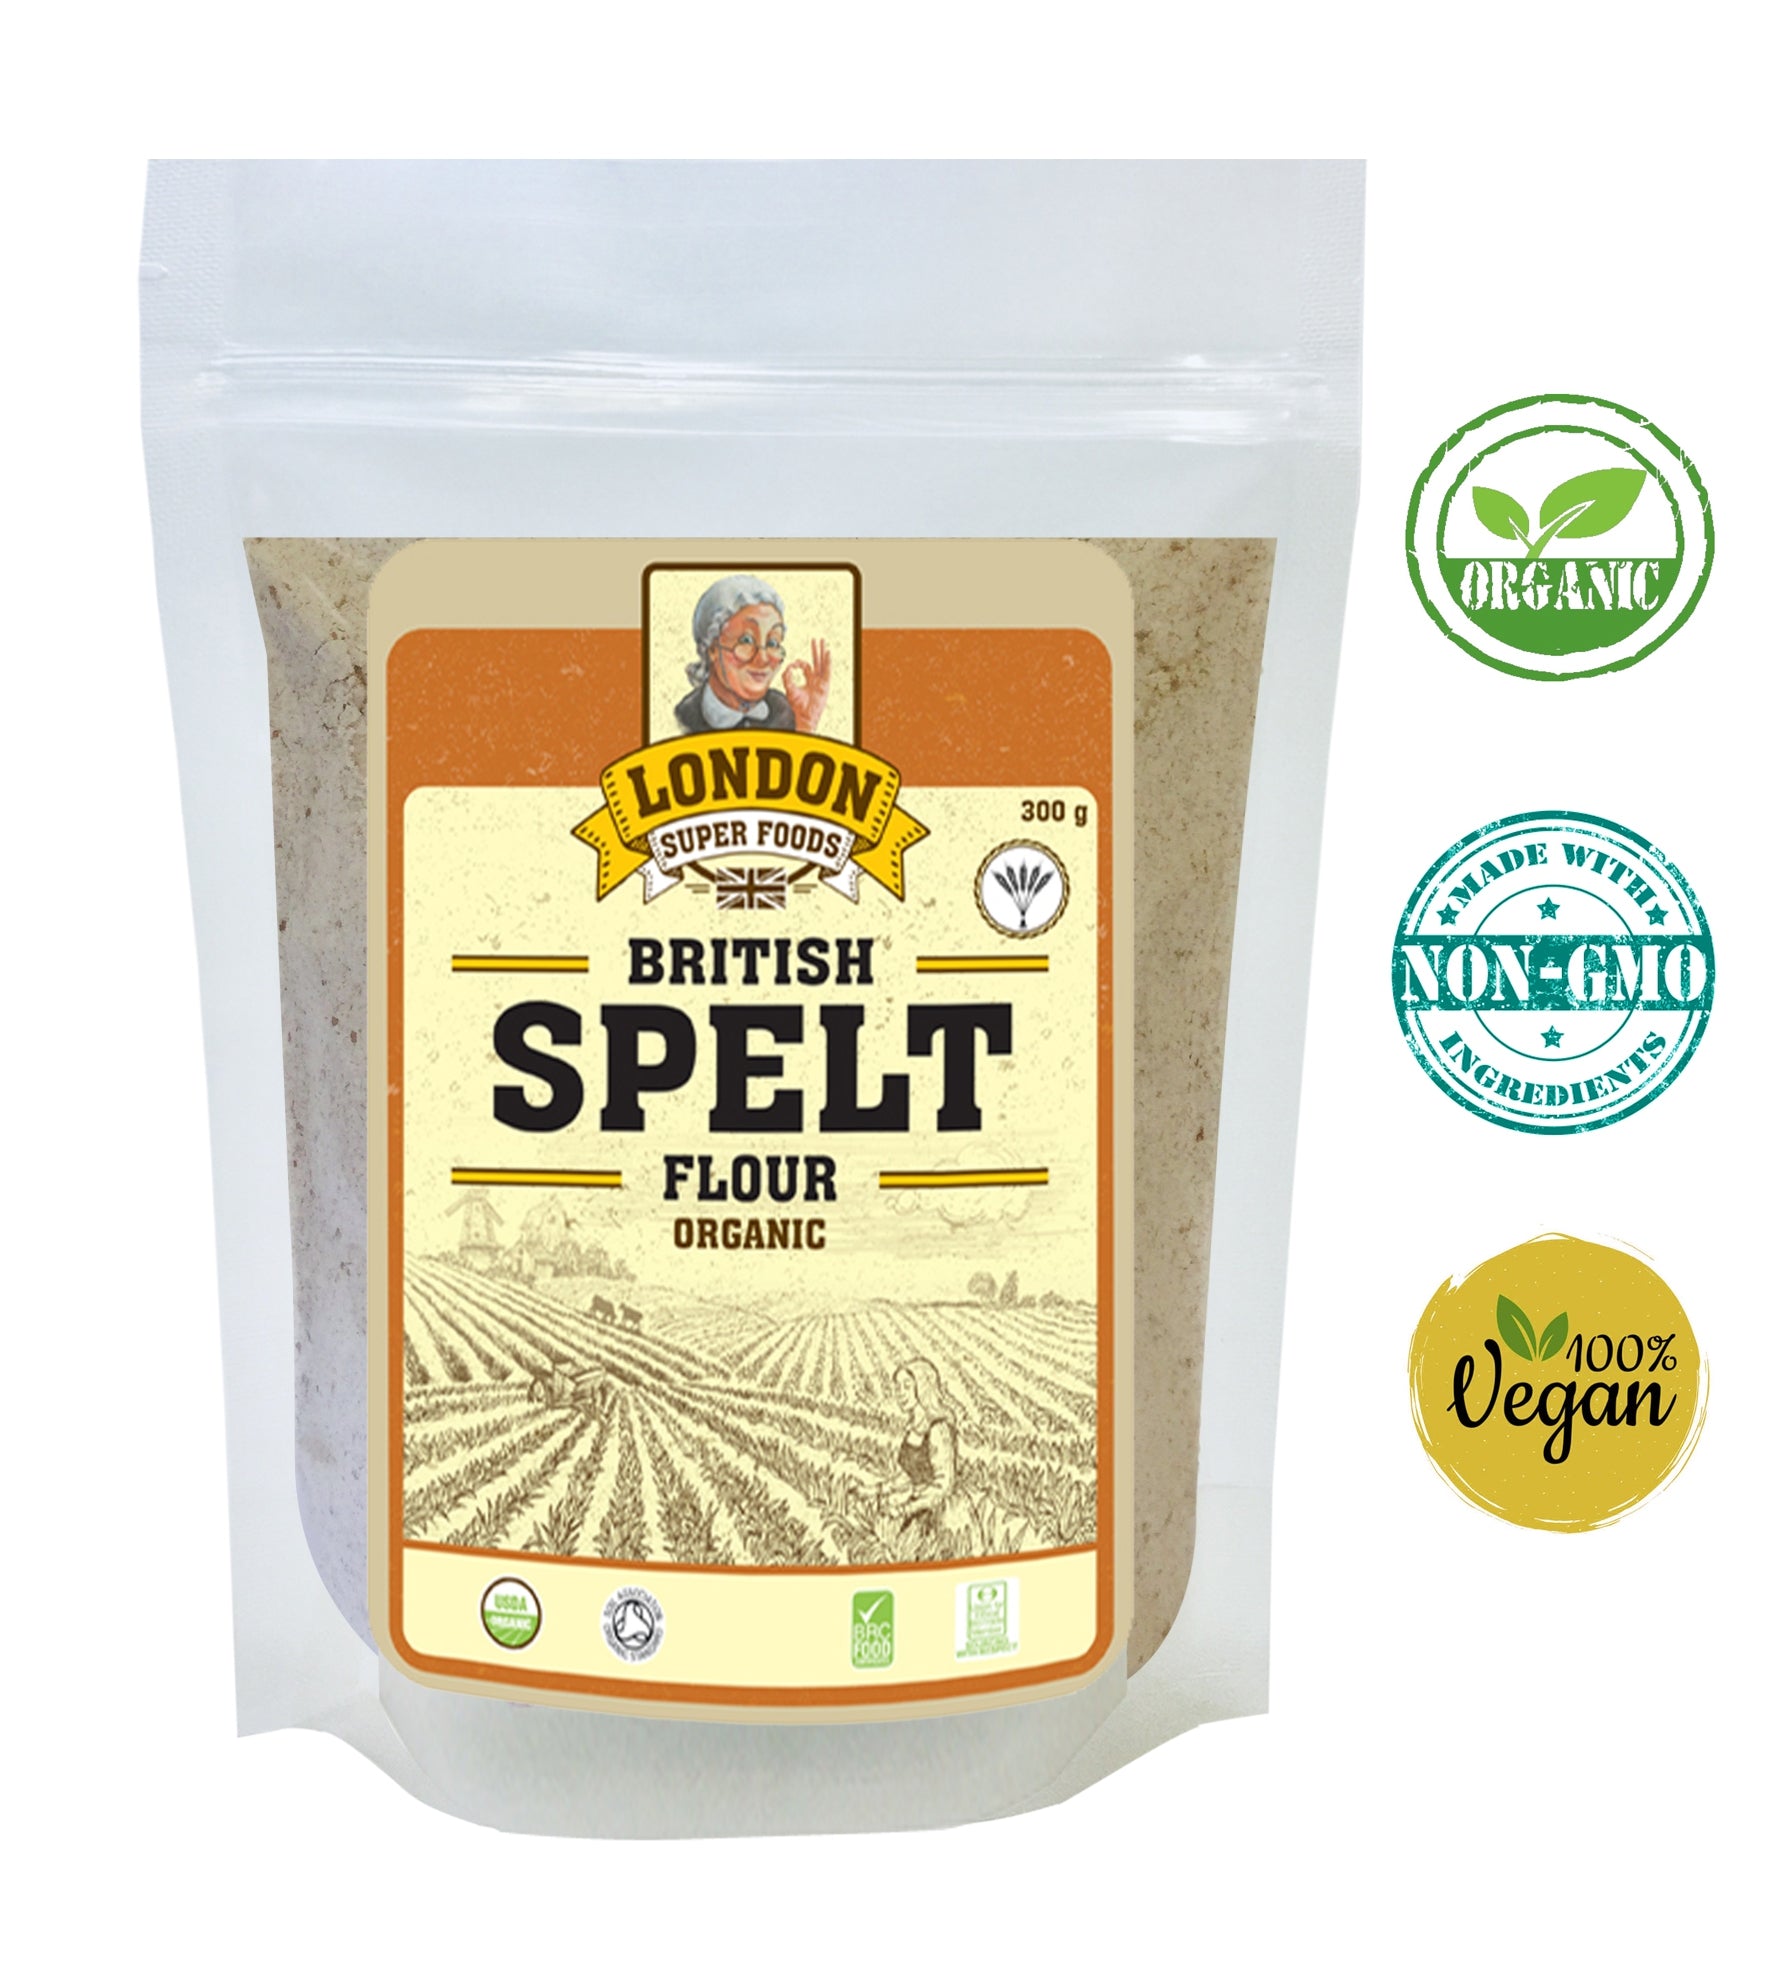 LONDON SUPER FOODS Organic British Spelt Flour, 300g